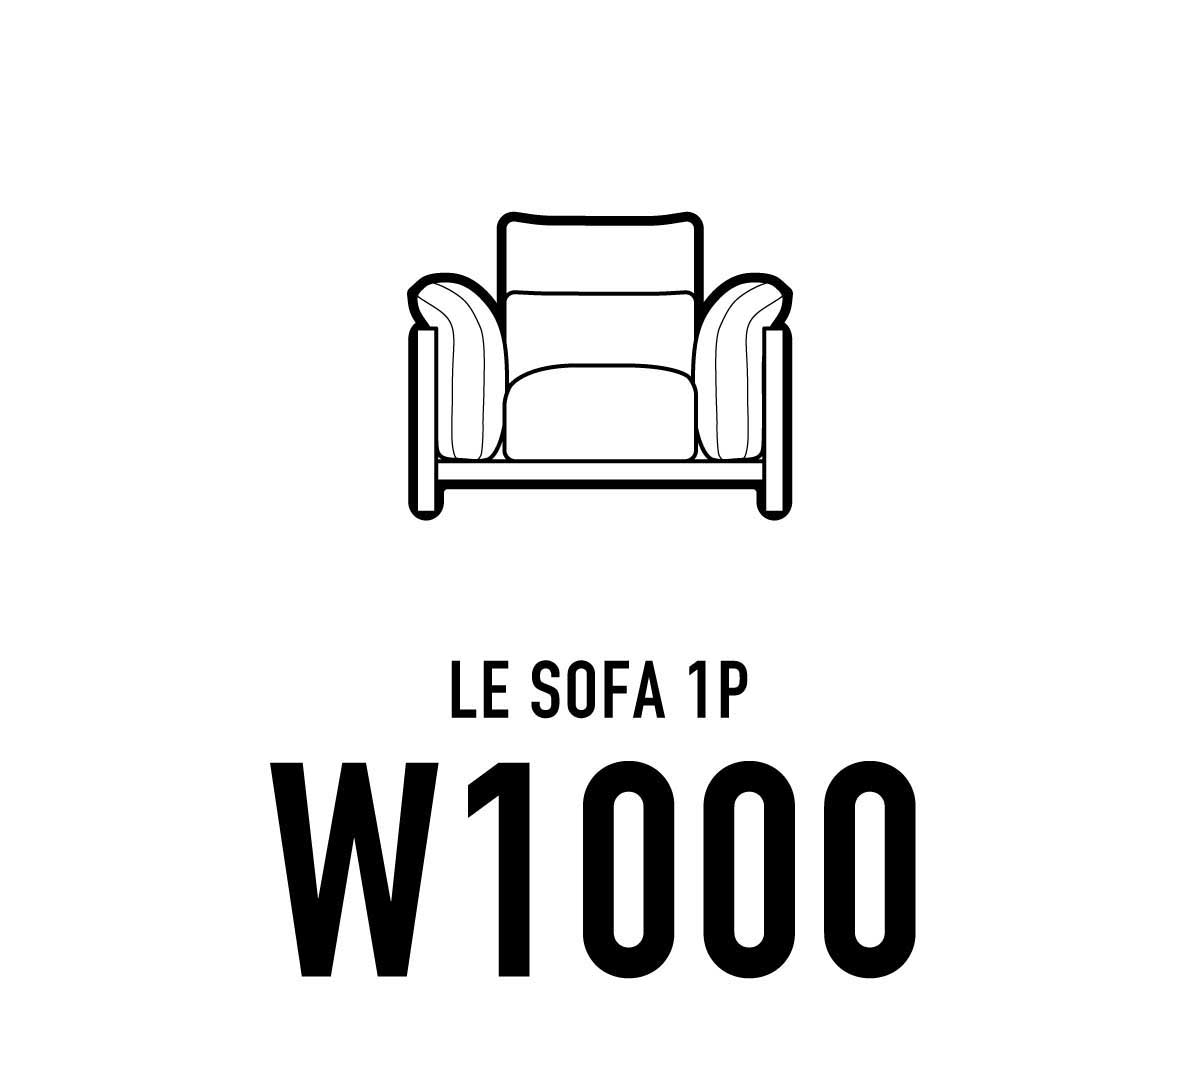 LEソファ W1000